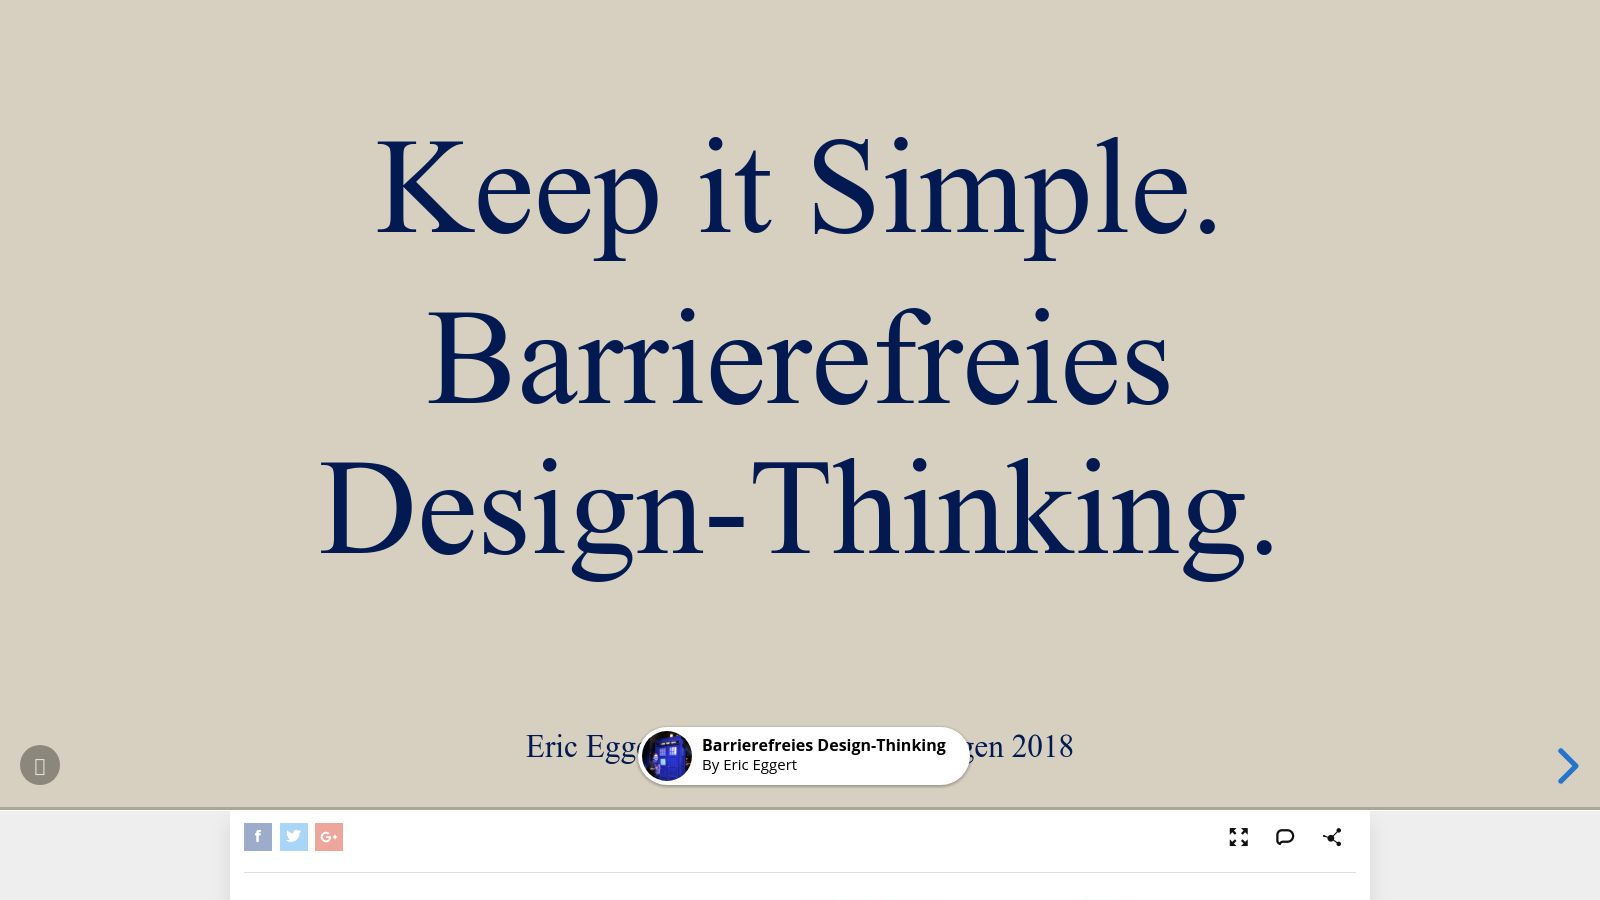 Keep it simple. Barrierefreies Design-Thinking.